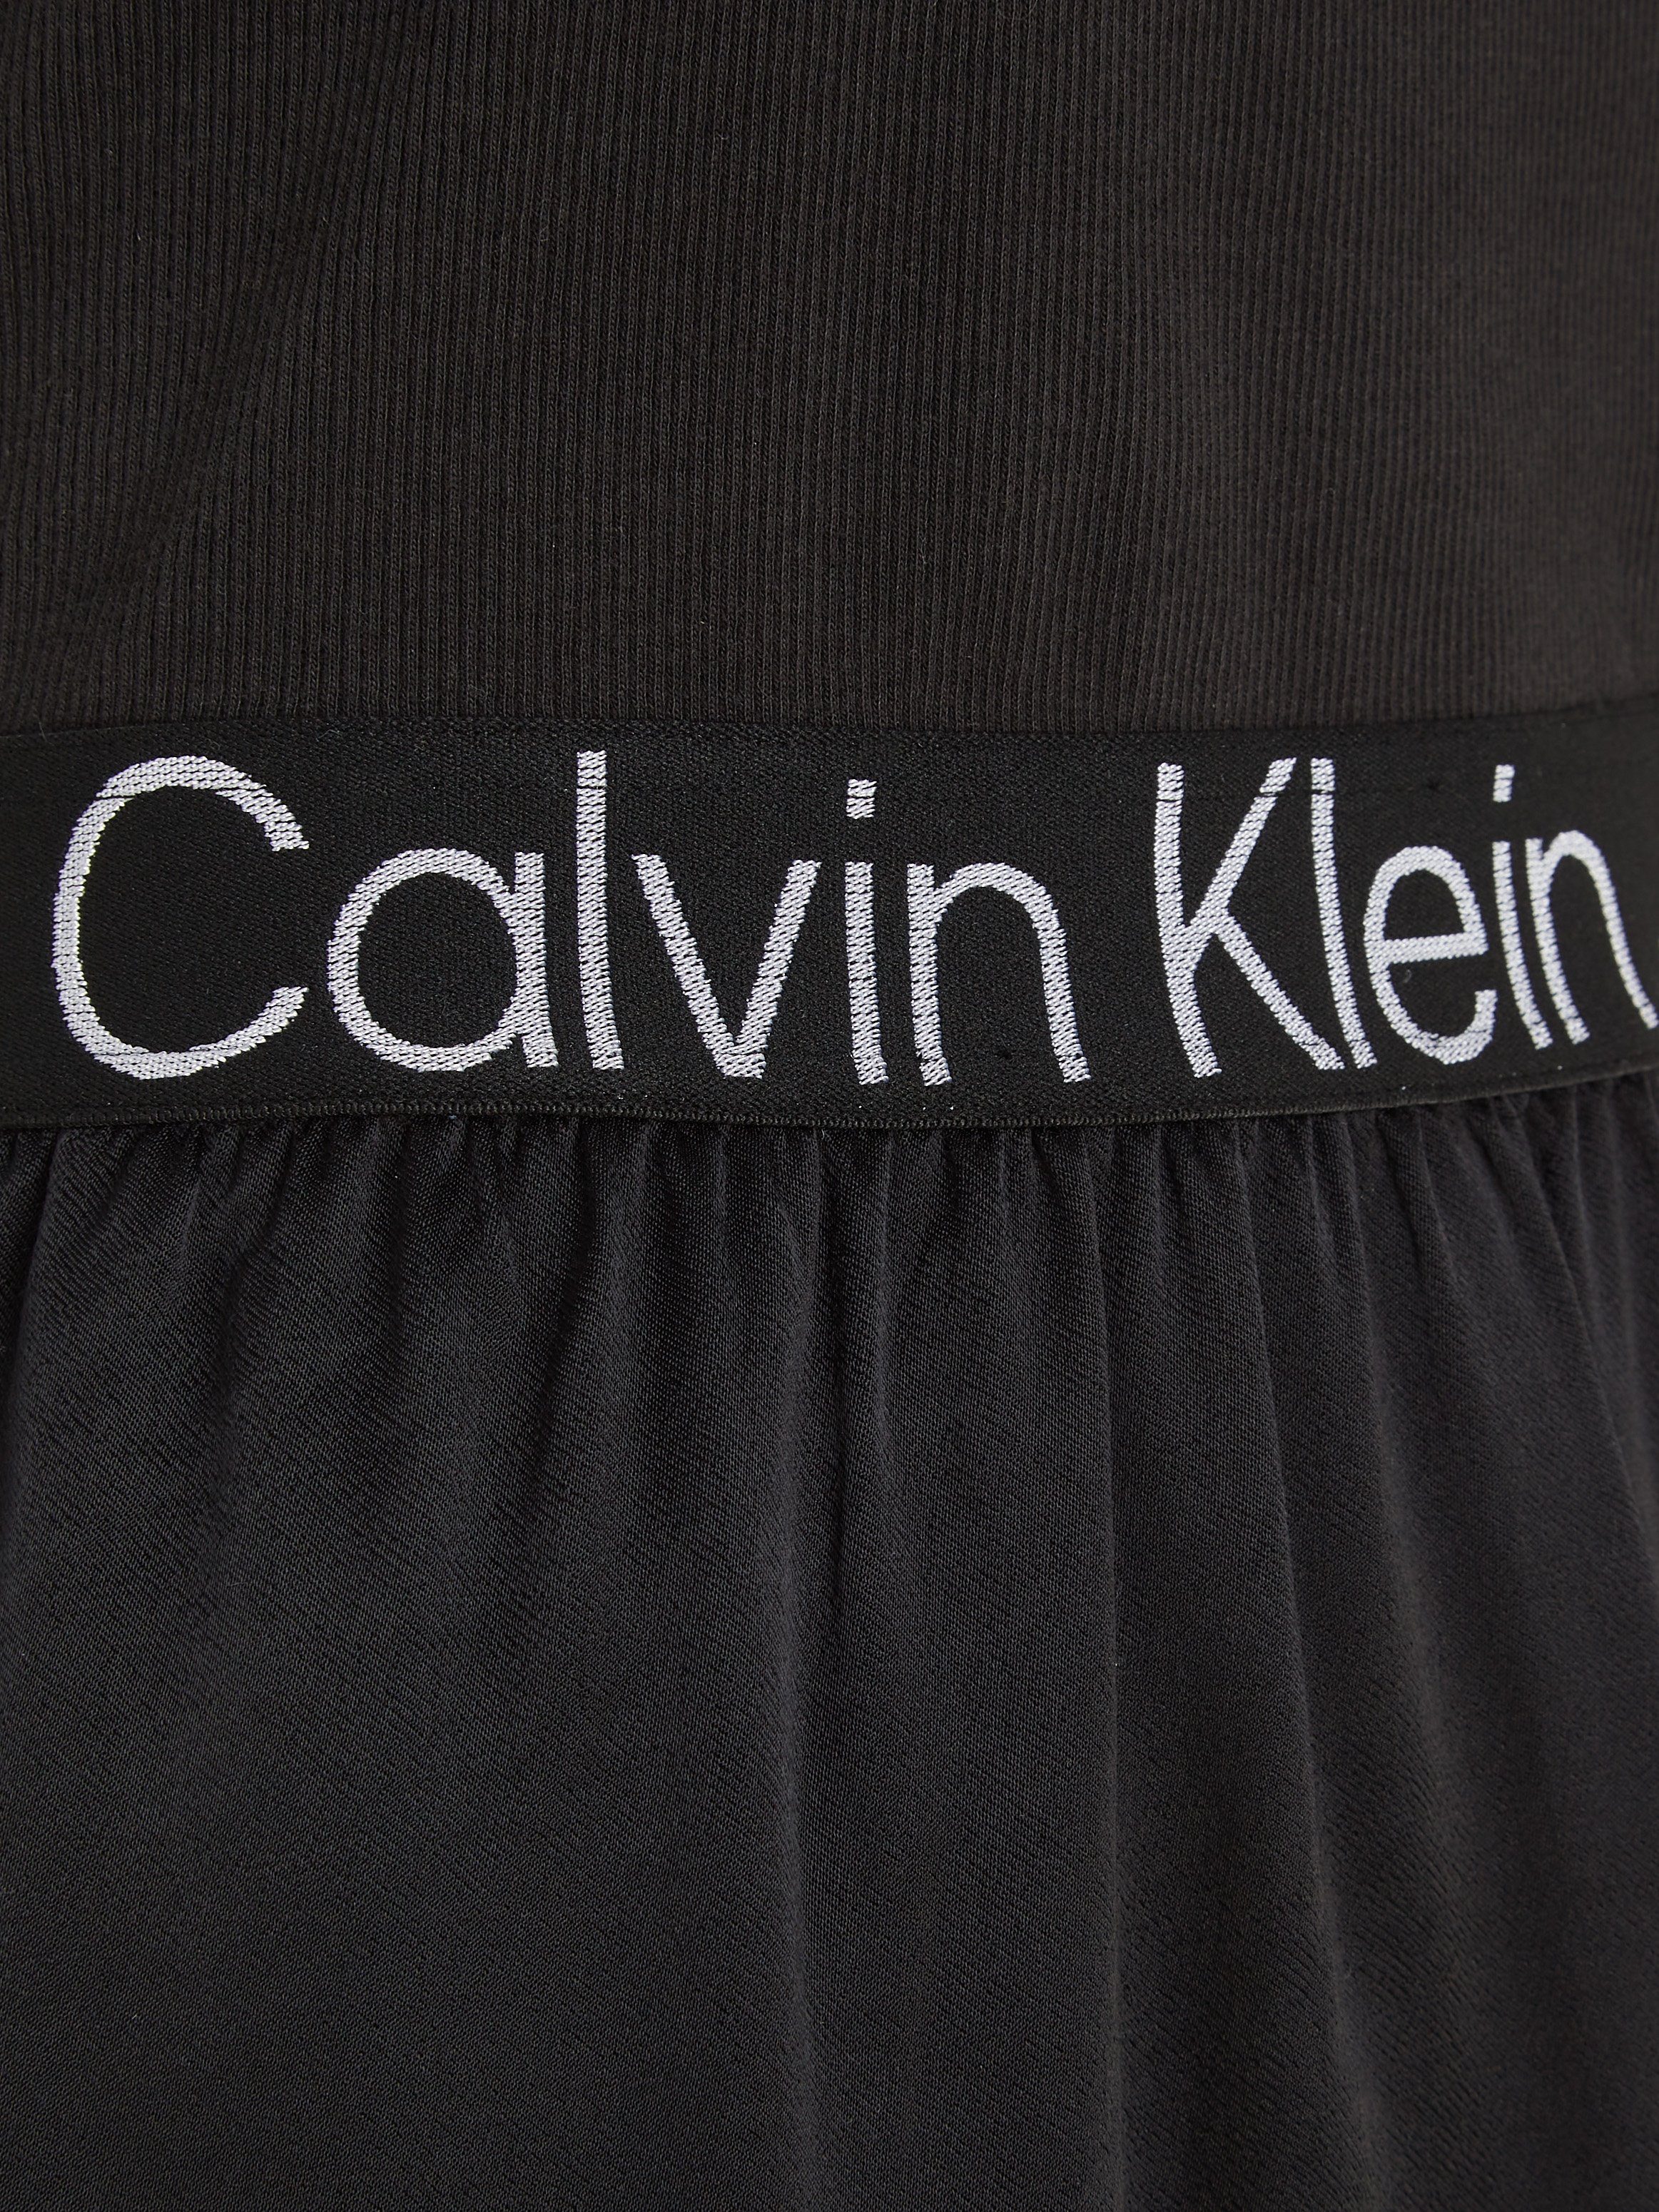 DRESS Jeans Jerseykleid Calvin RACERBACK LOGO ELASTIC Klein